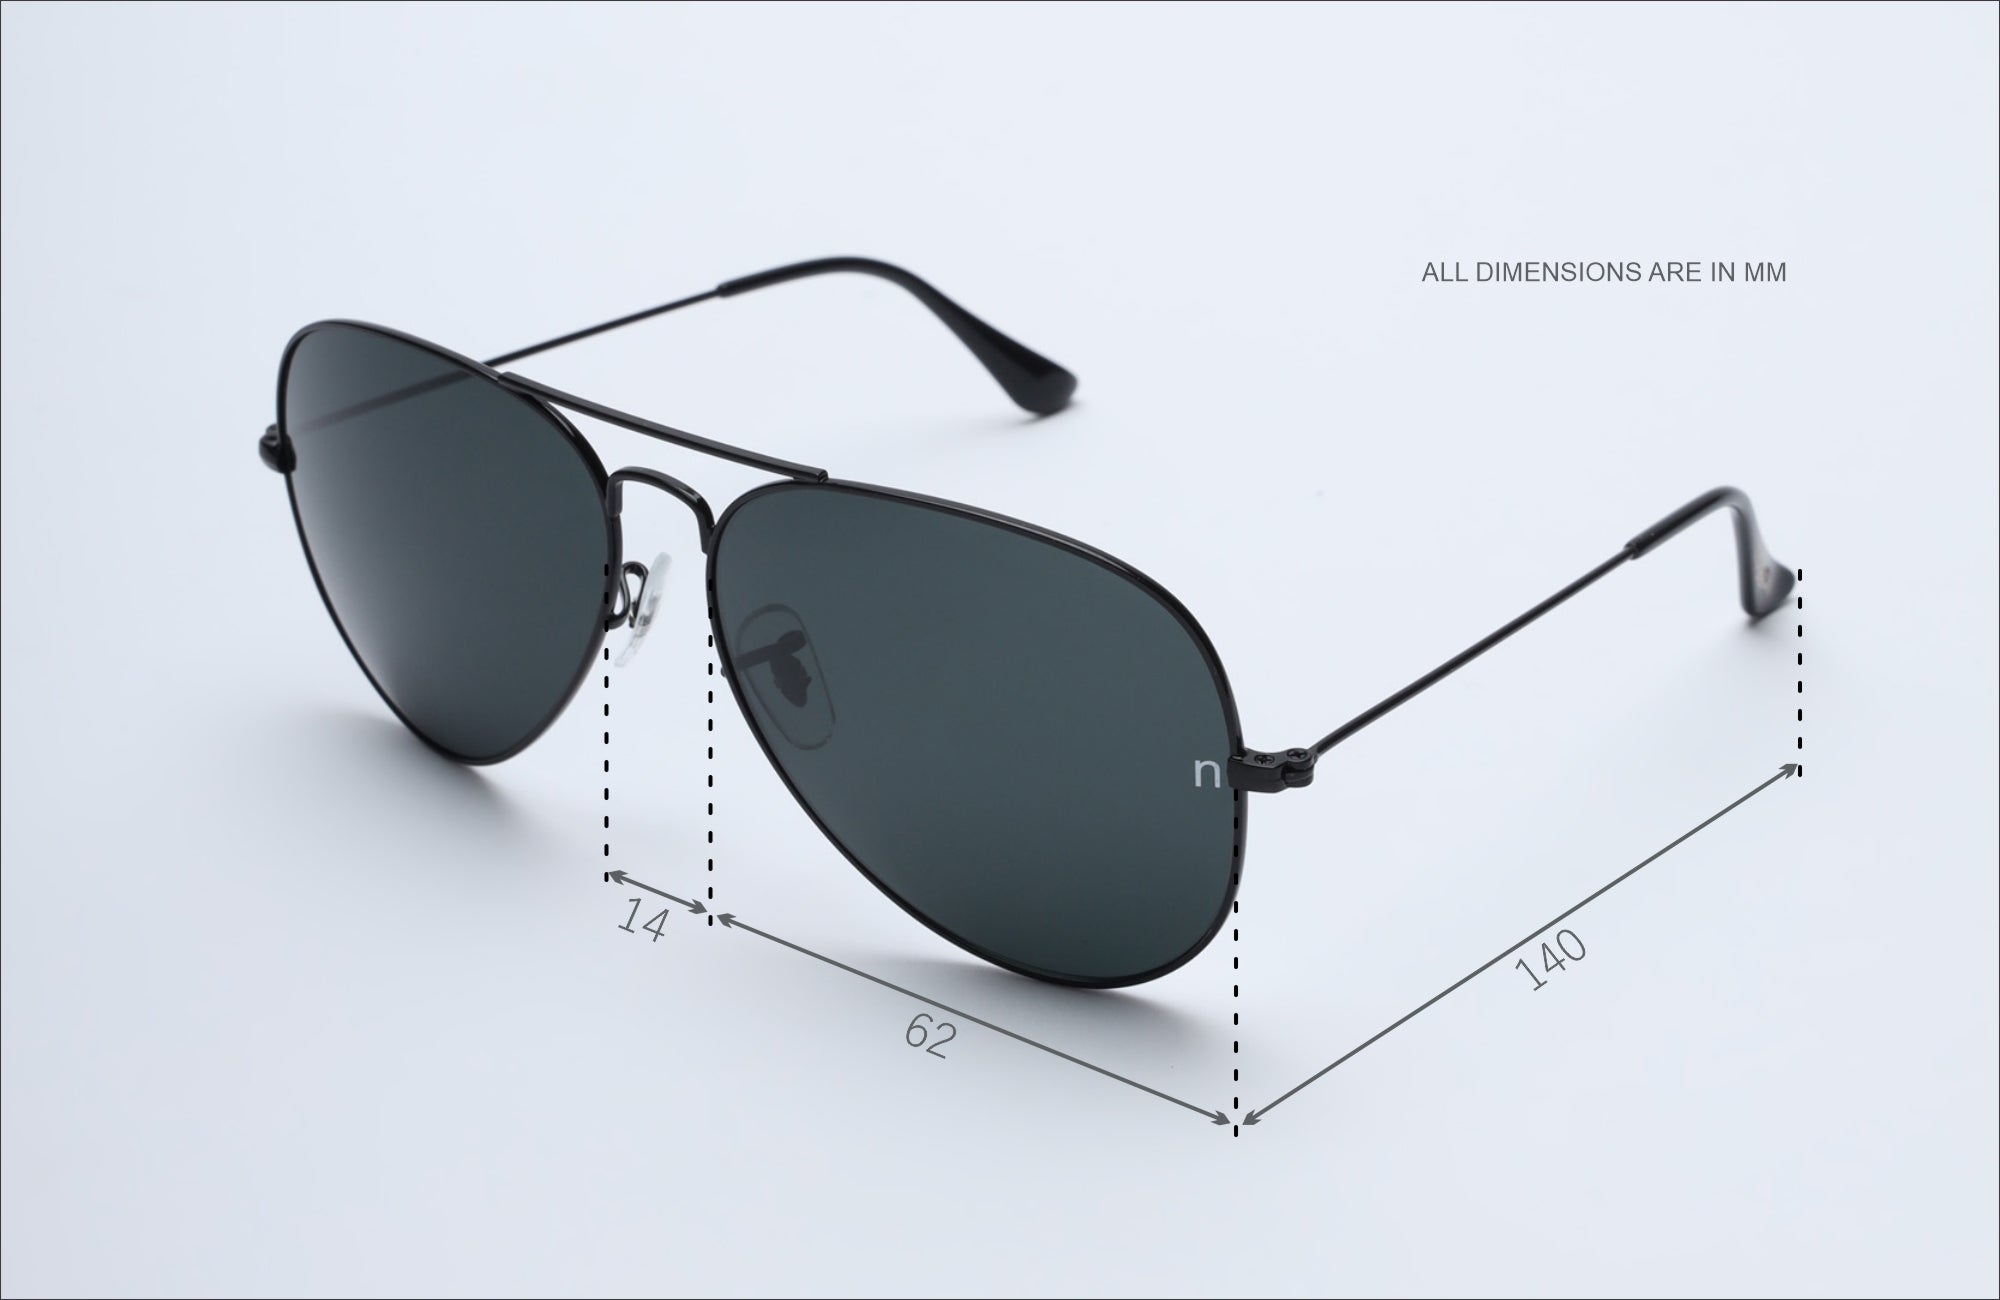 NS1002BFBL PC Black Frame with Black Glass Lens Sunglasses